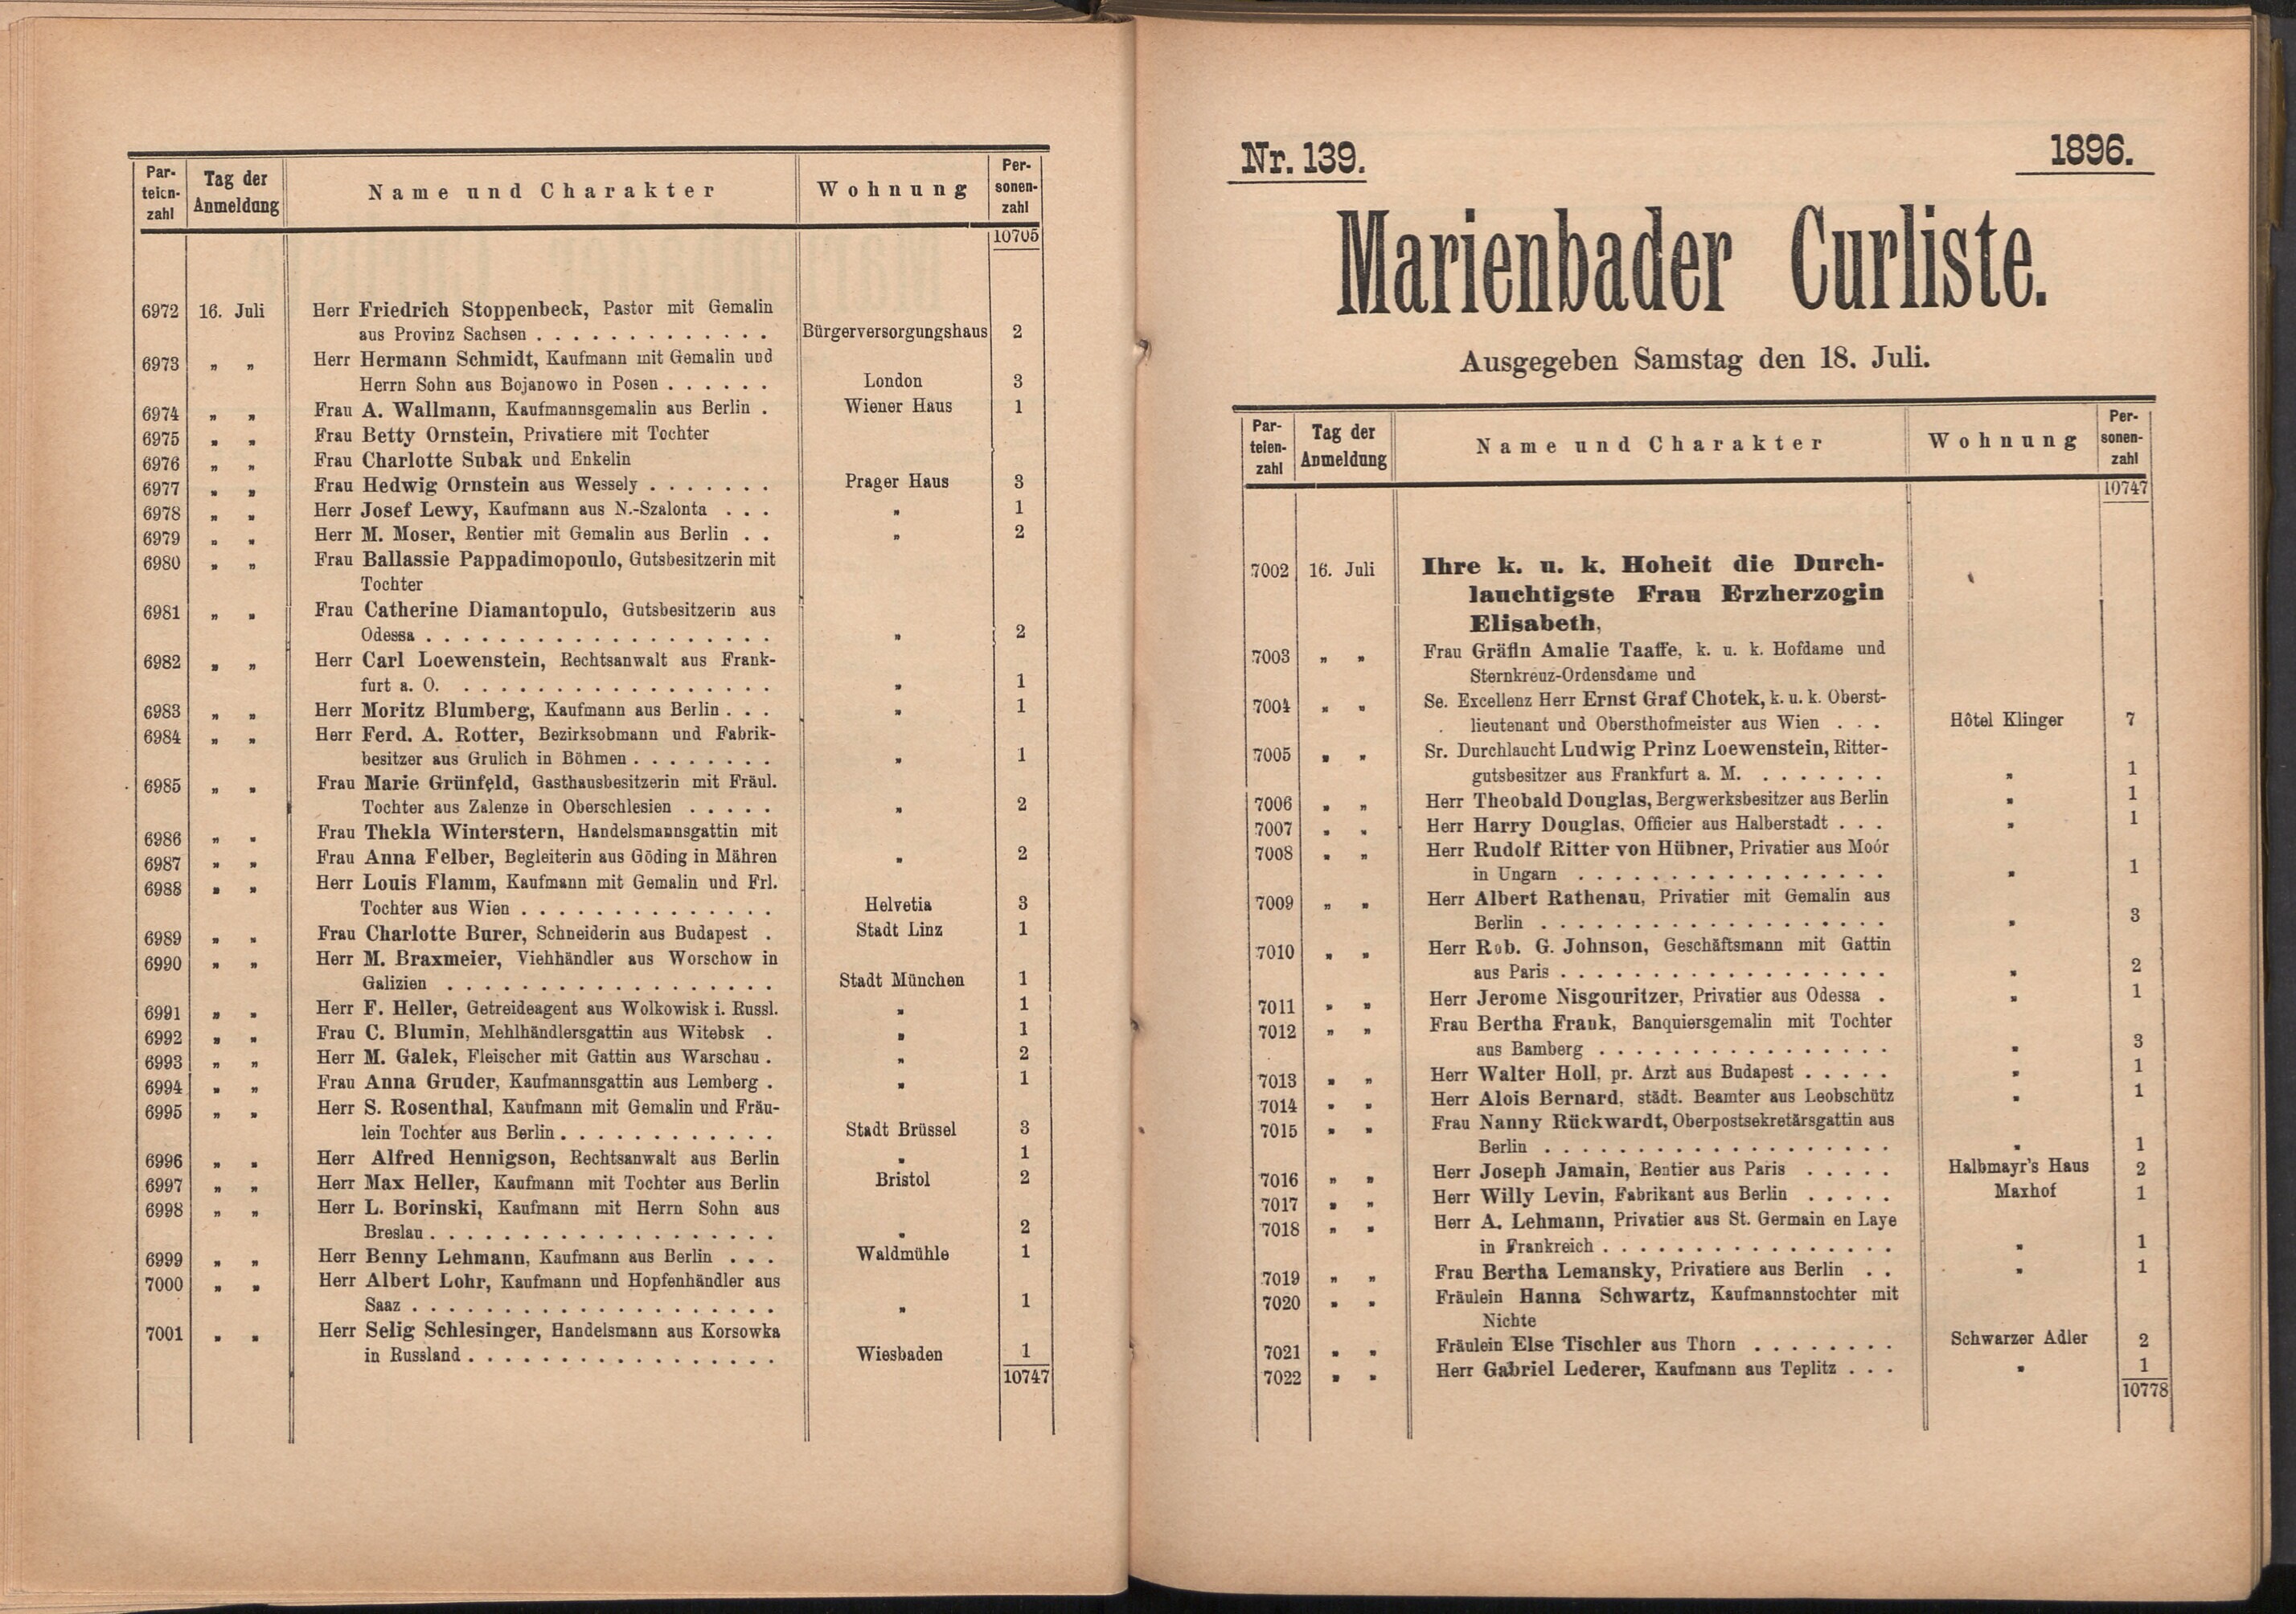 150. soap-ch_knihovna_marienbader-kurliste-1896_1500